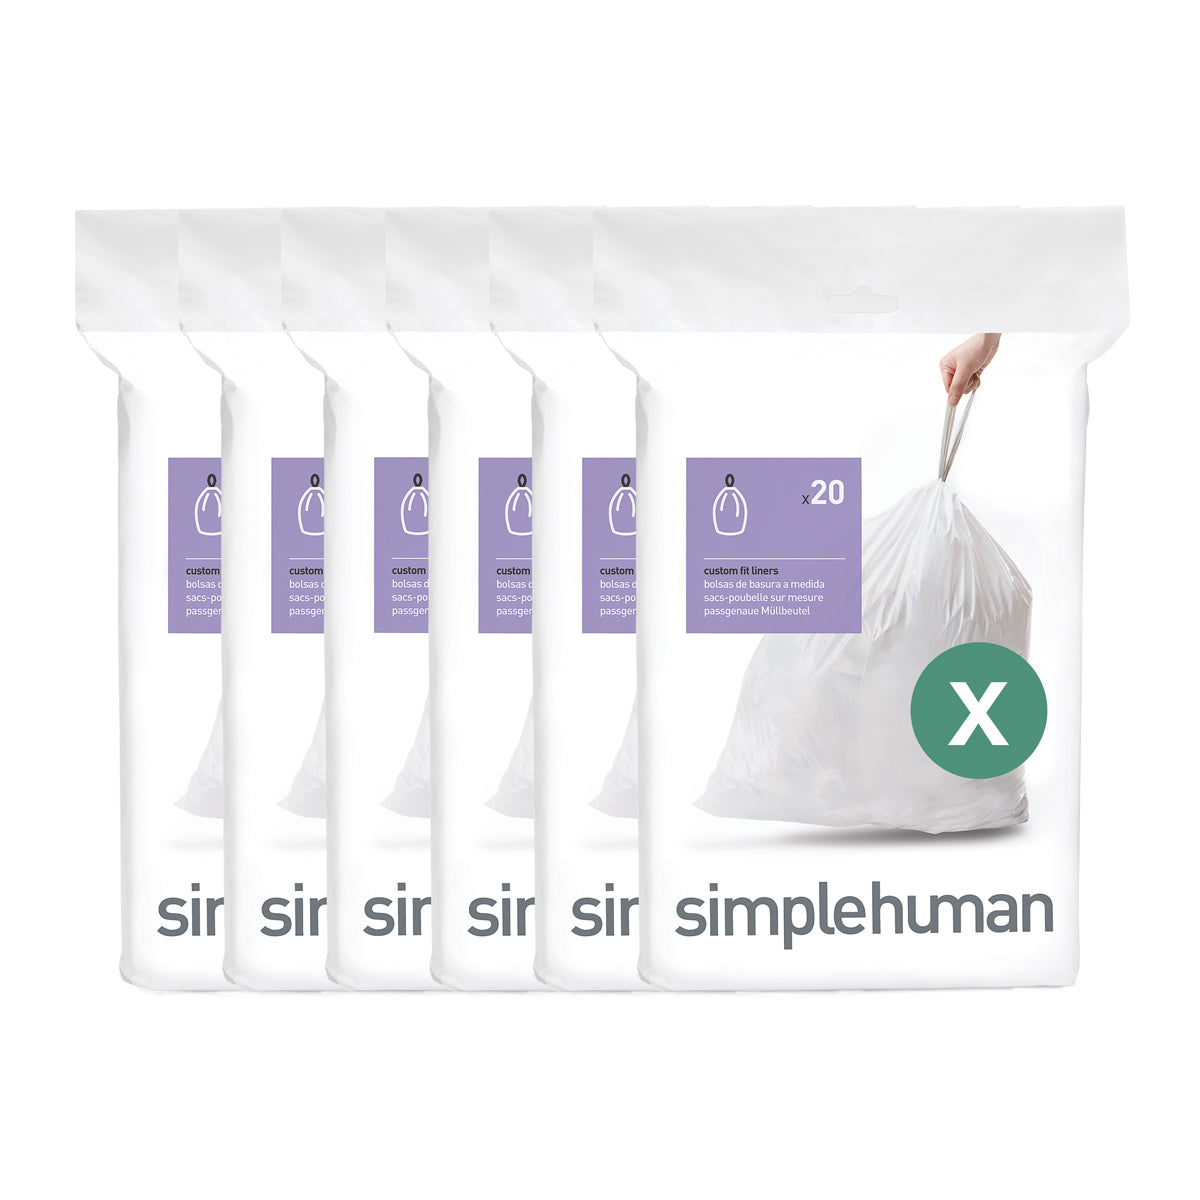 Simplehuman Code P - Best Price in Singapore - Oct 2023